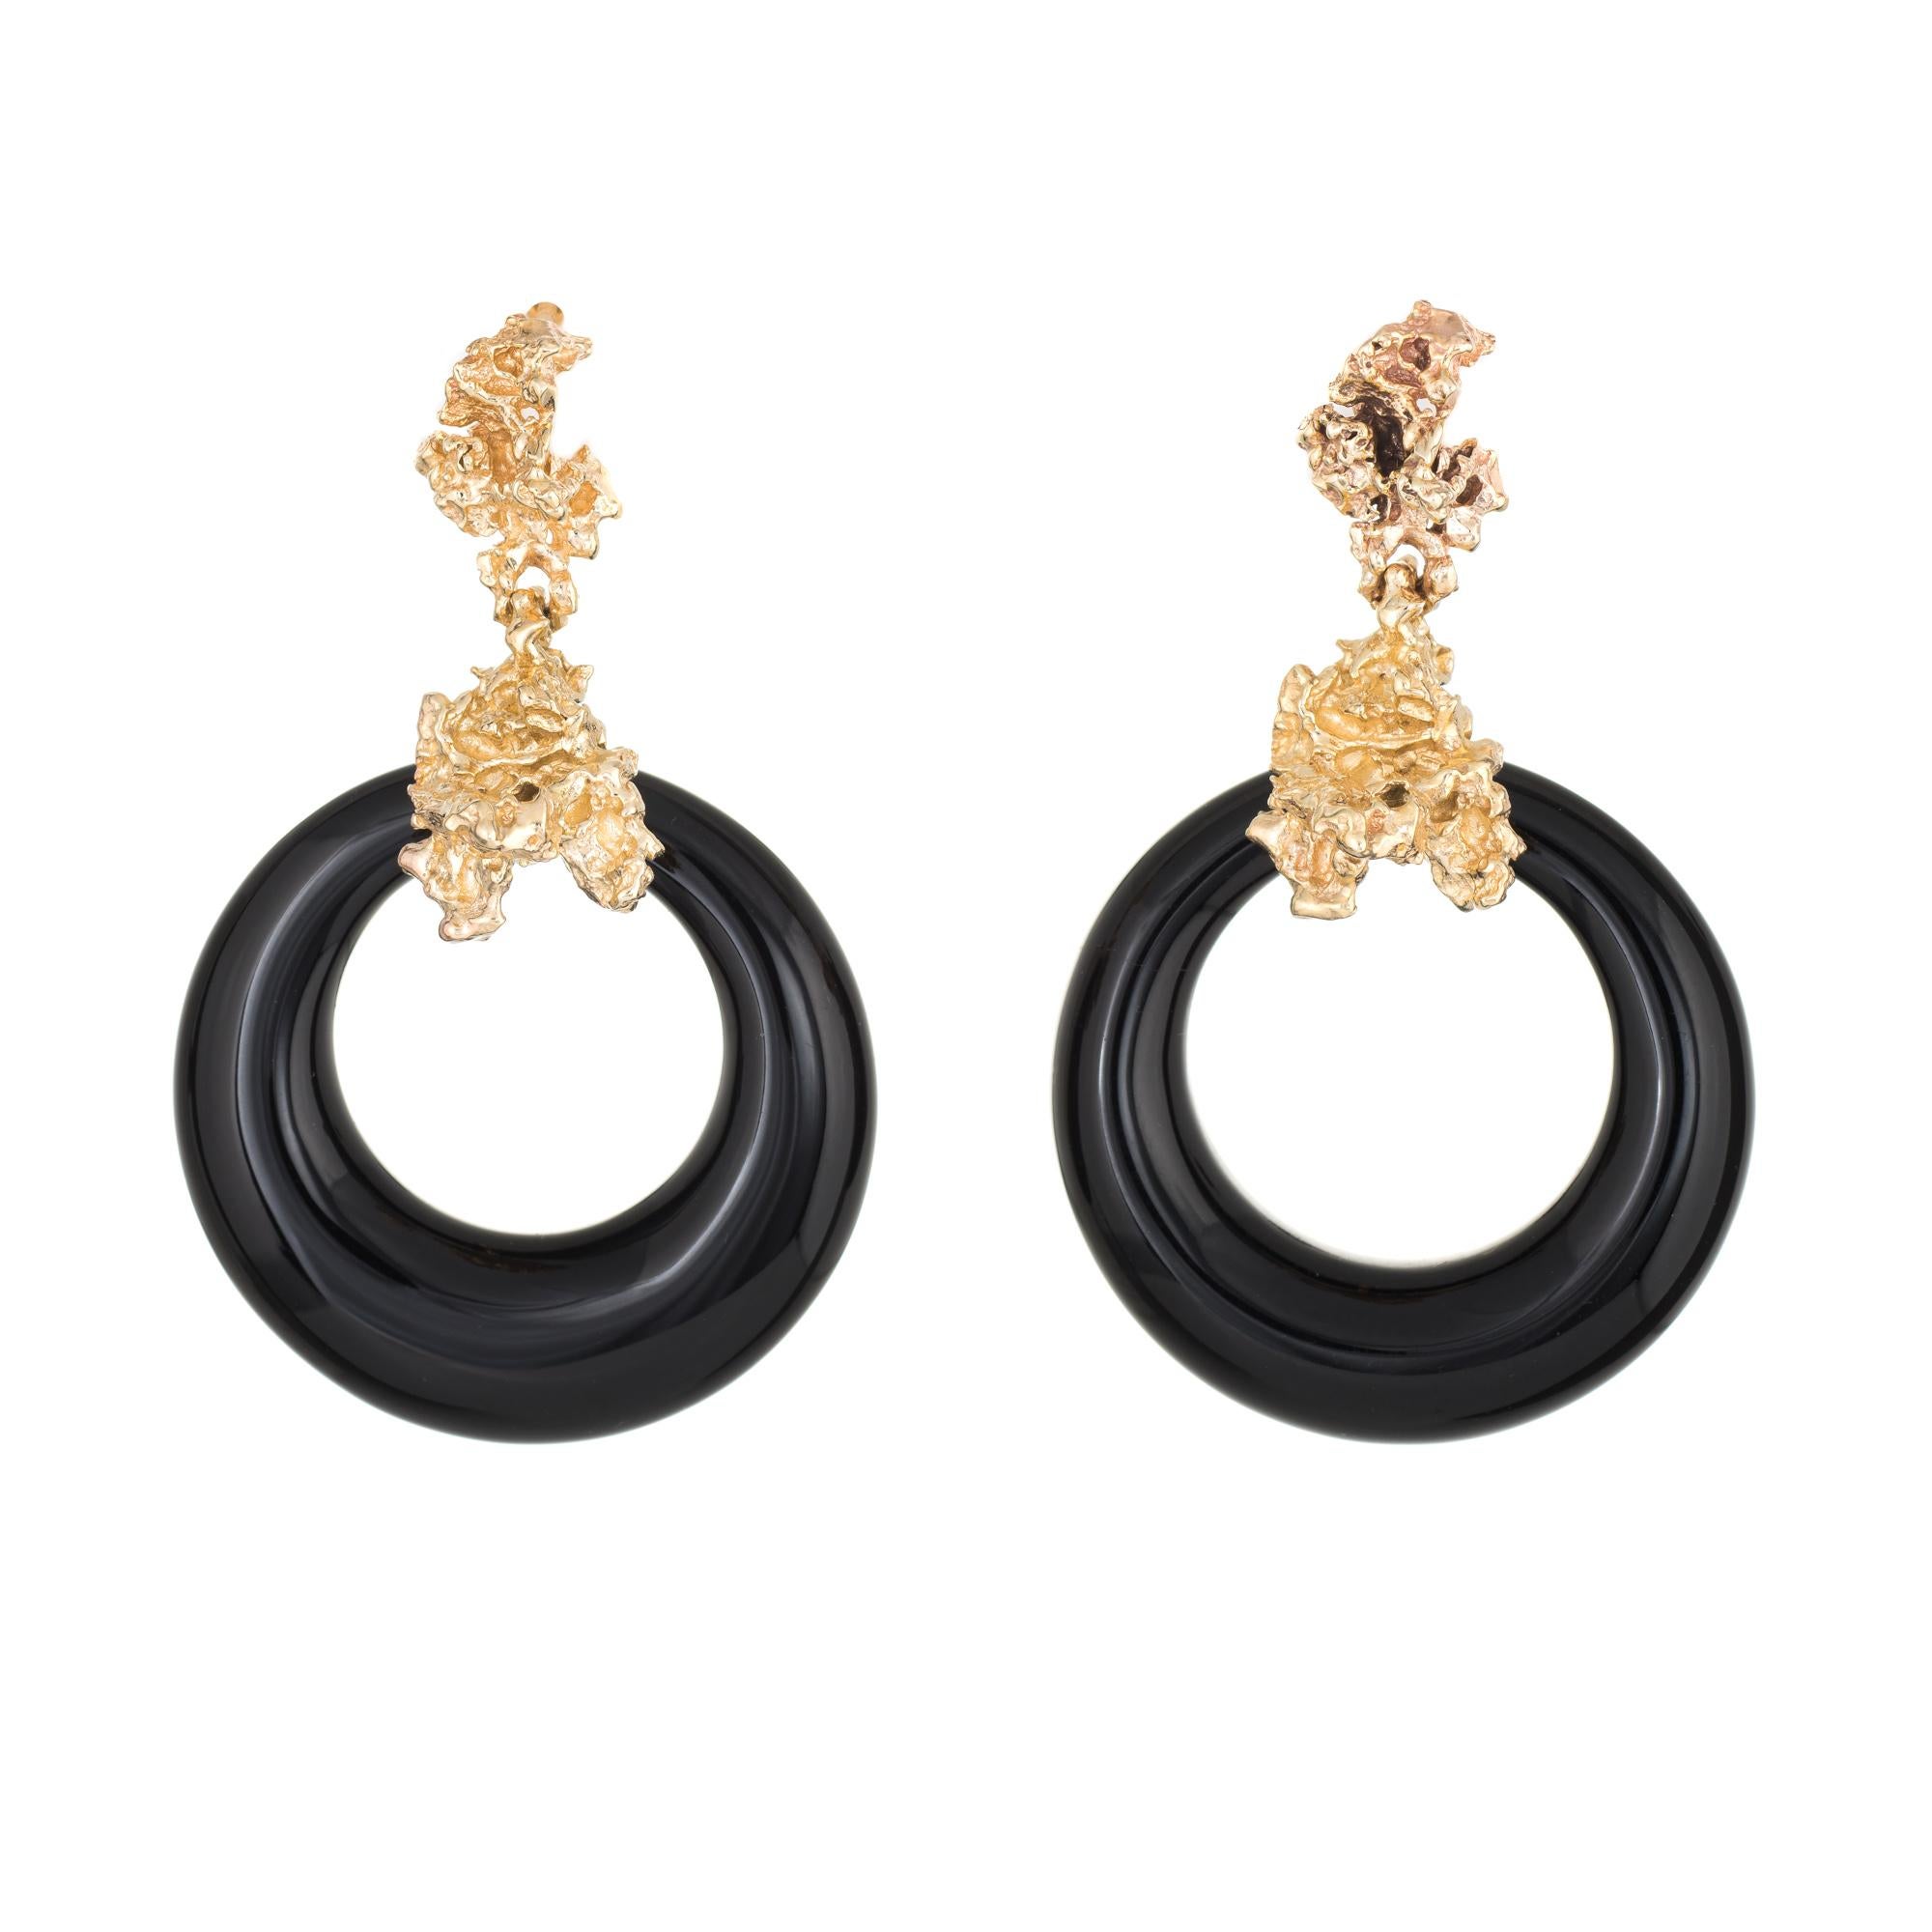 Modern Vintage 1970s Onyx Gold Nugget Earrings 14 Karat Round Hoops Freeform Jewelry